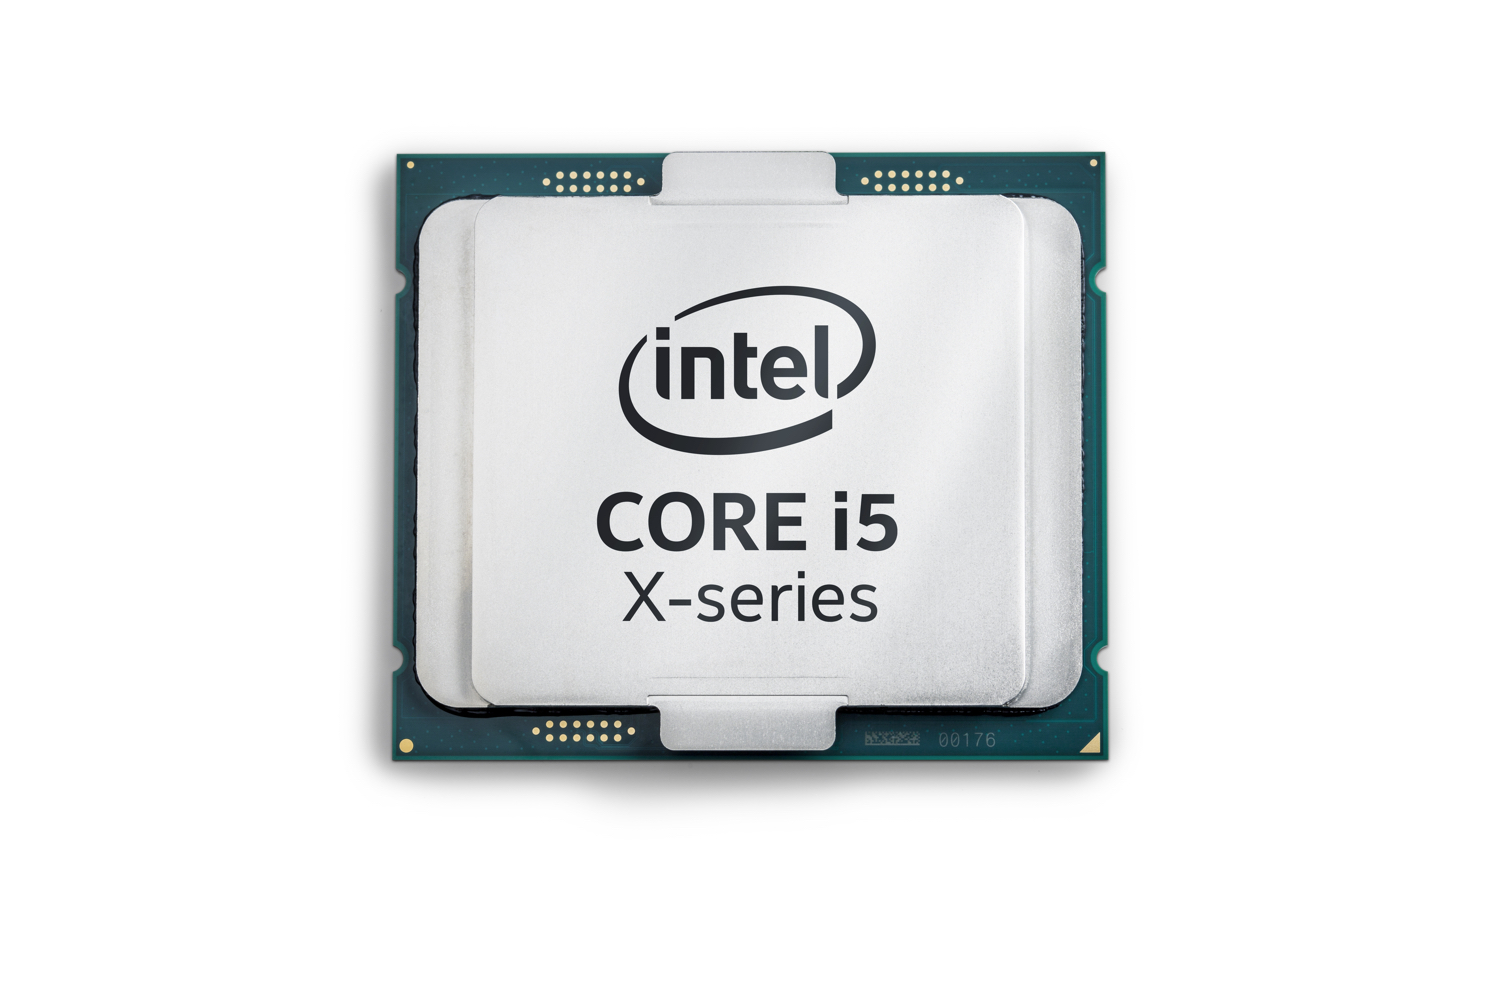 intel x series computex 2017 intelcorei6xserieskabylake